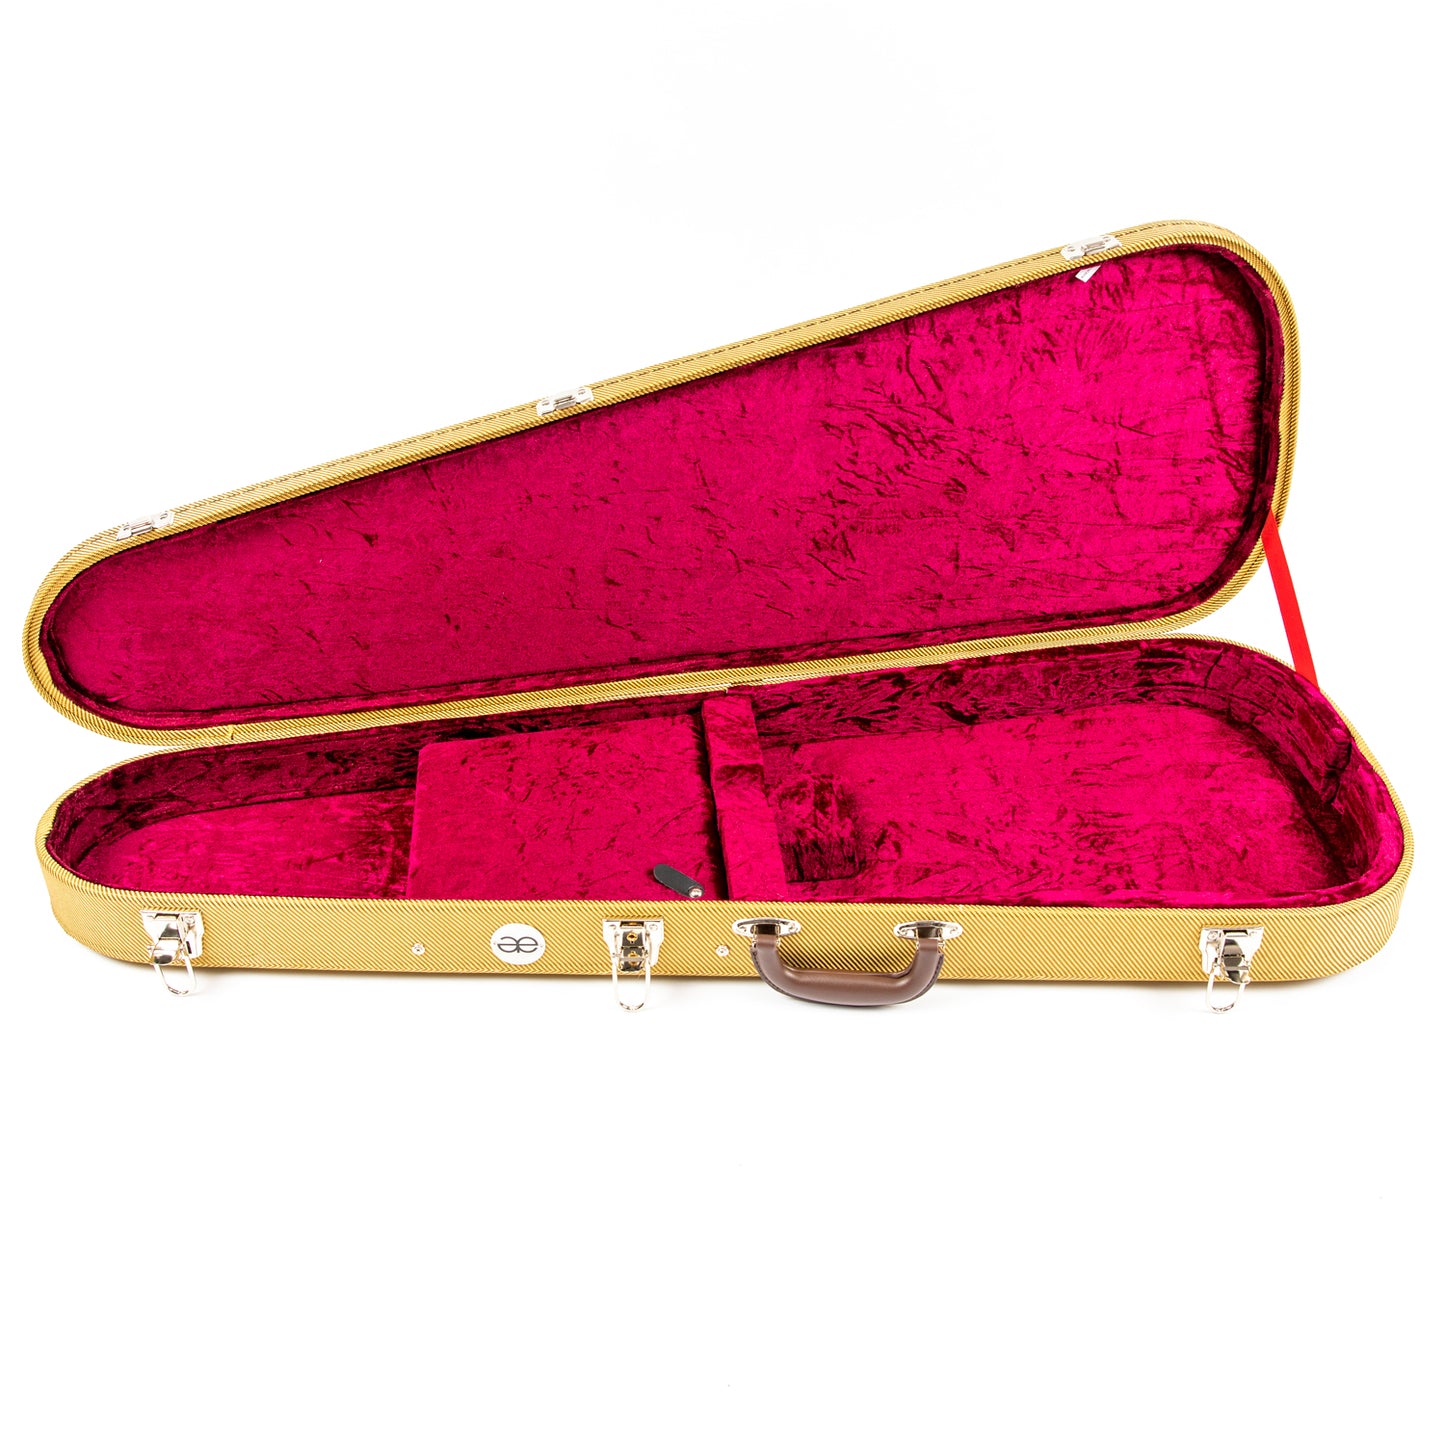 Teardrop Tweed Guitar Case with Burgundy Plush Lining